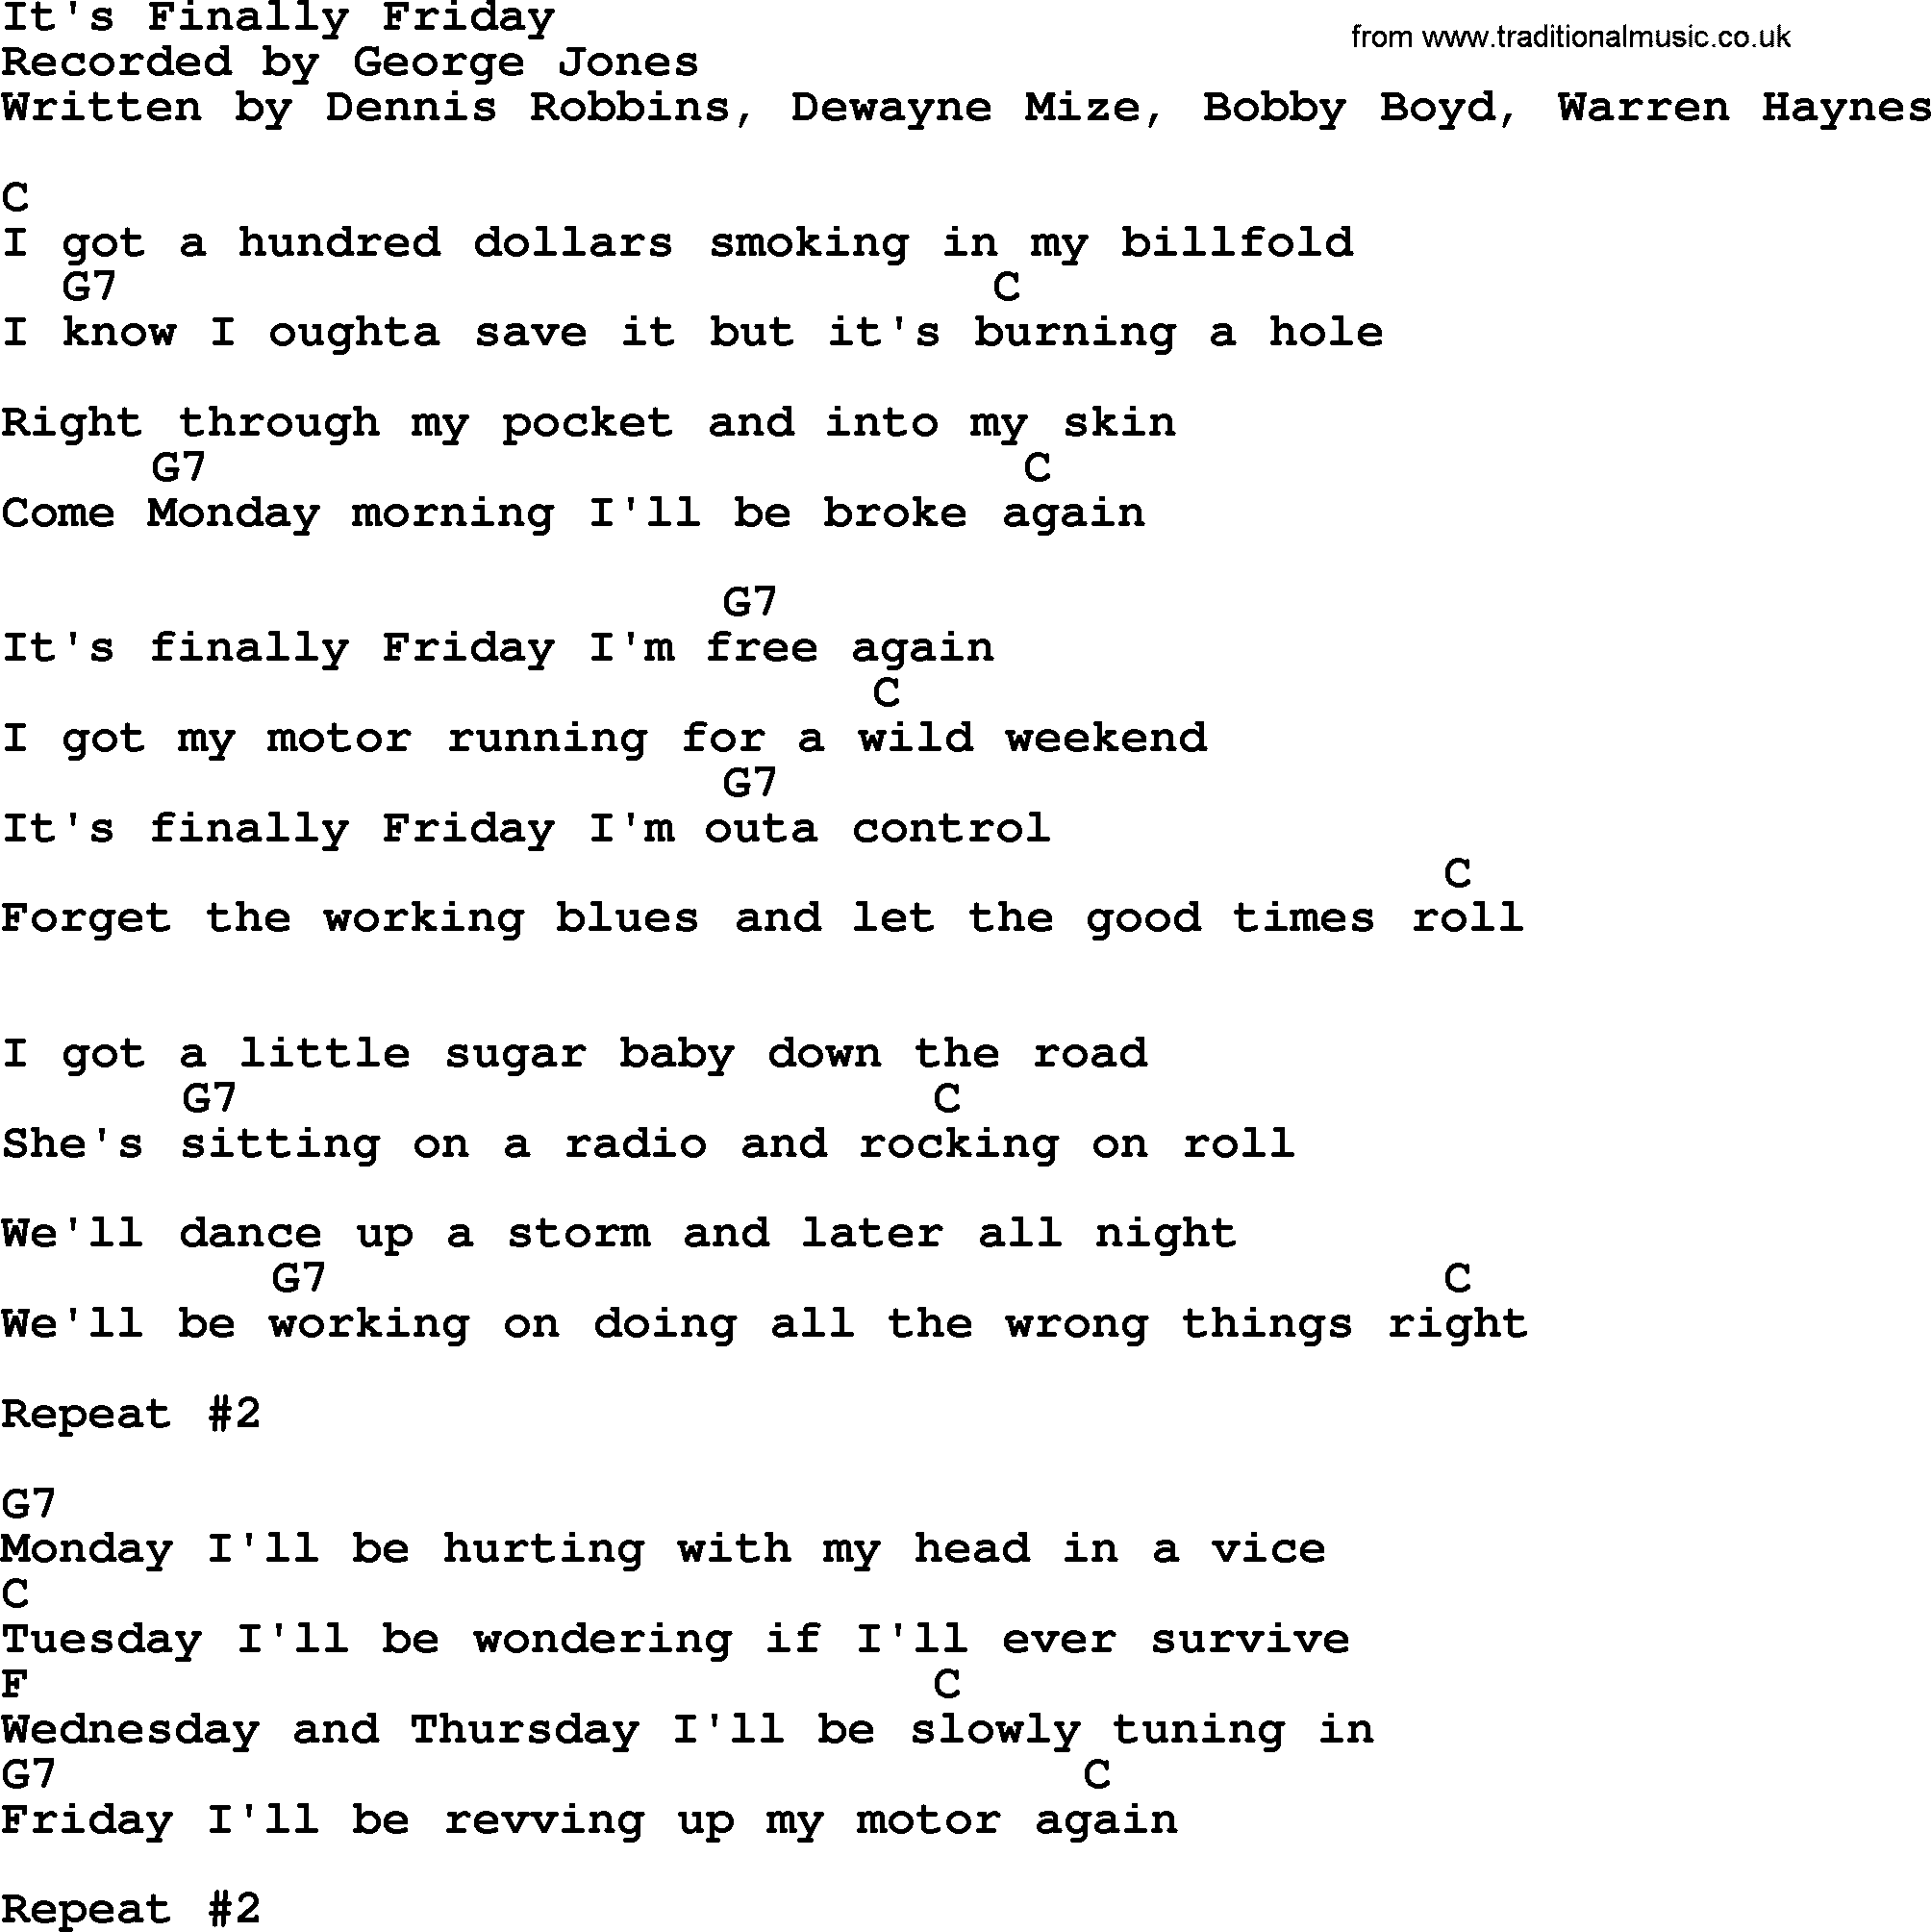 George Jones song: It's Finally Friday, lyrics and chords